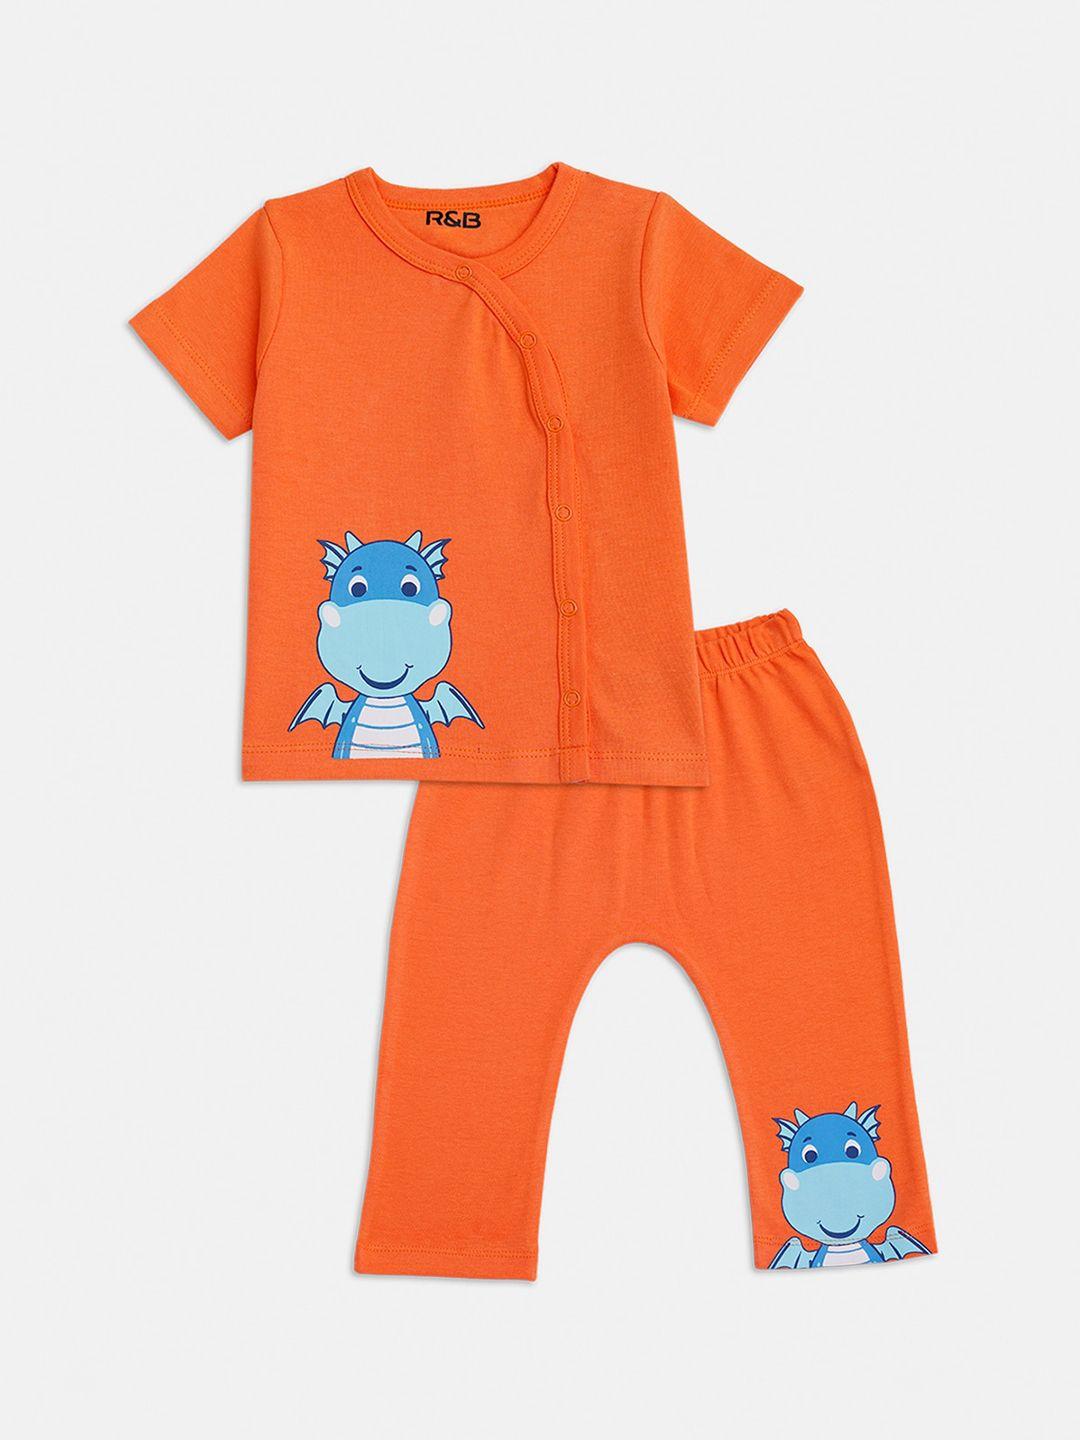 r&b boys orange & blue printed shirt with shorts